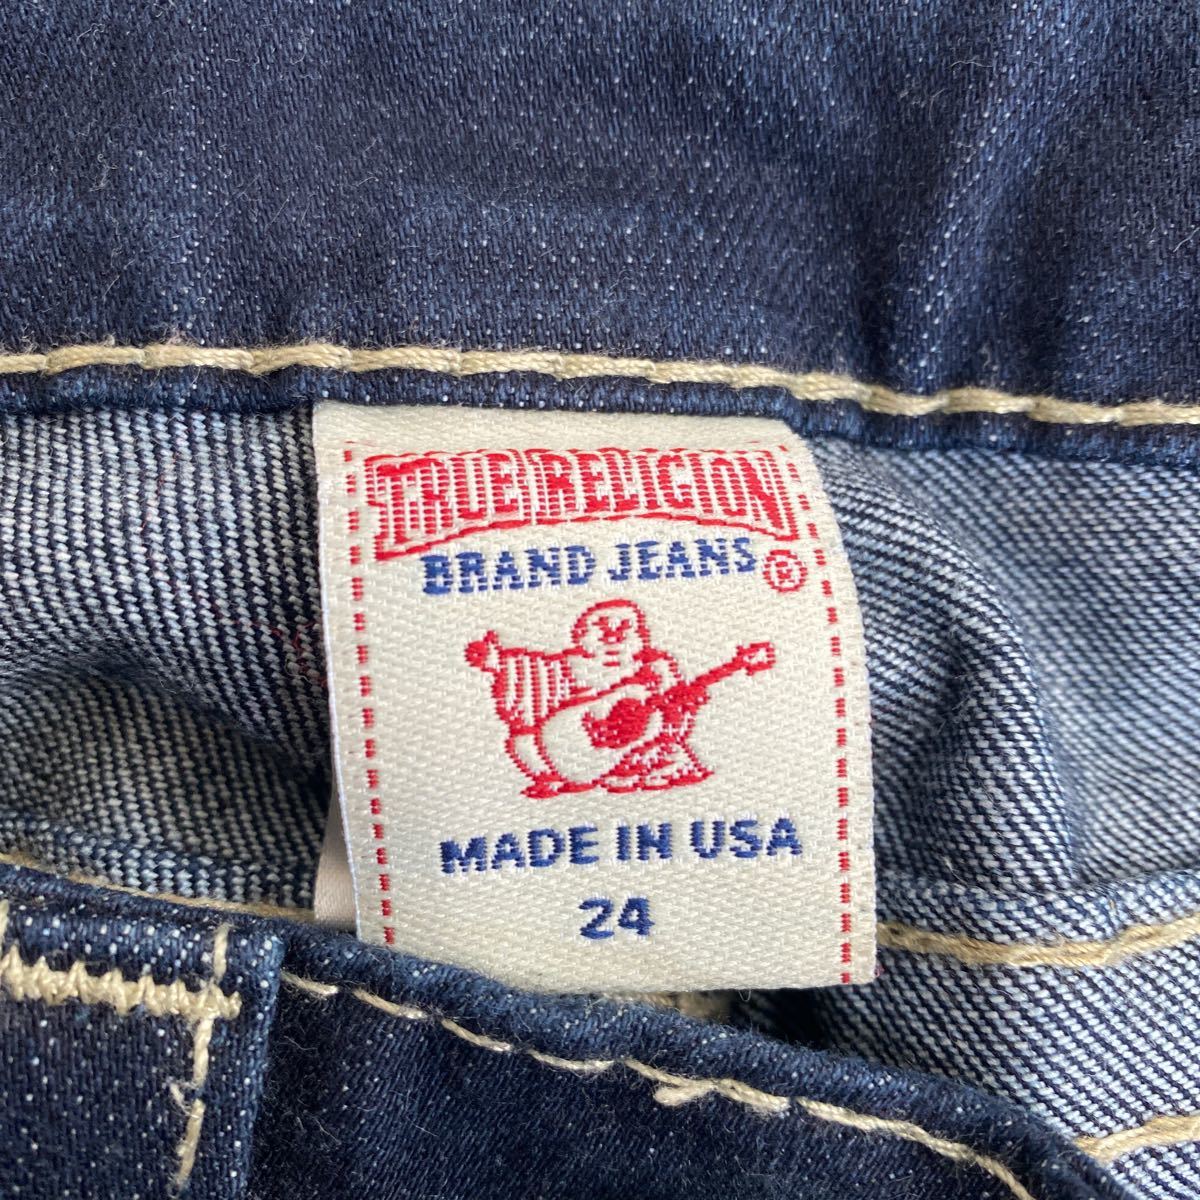 t25 TRUE RELIGION jeans size 24 inscription USA made 